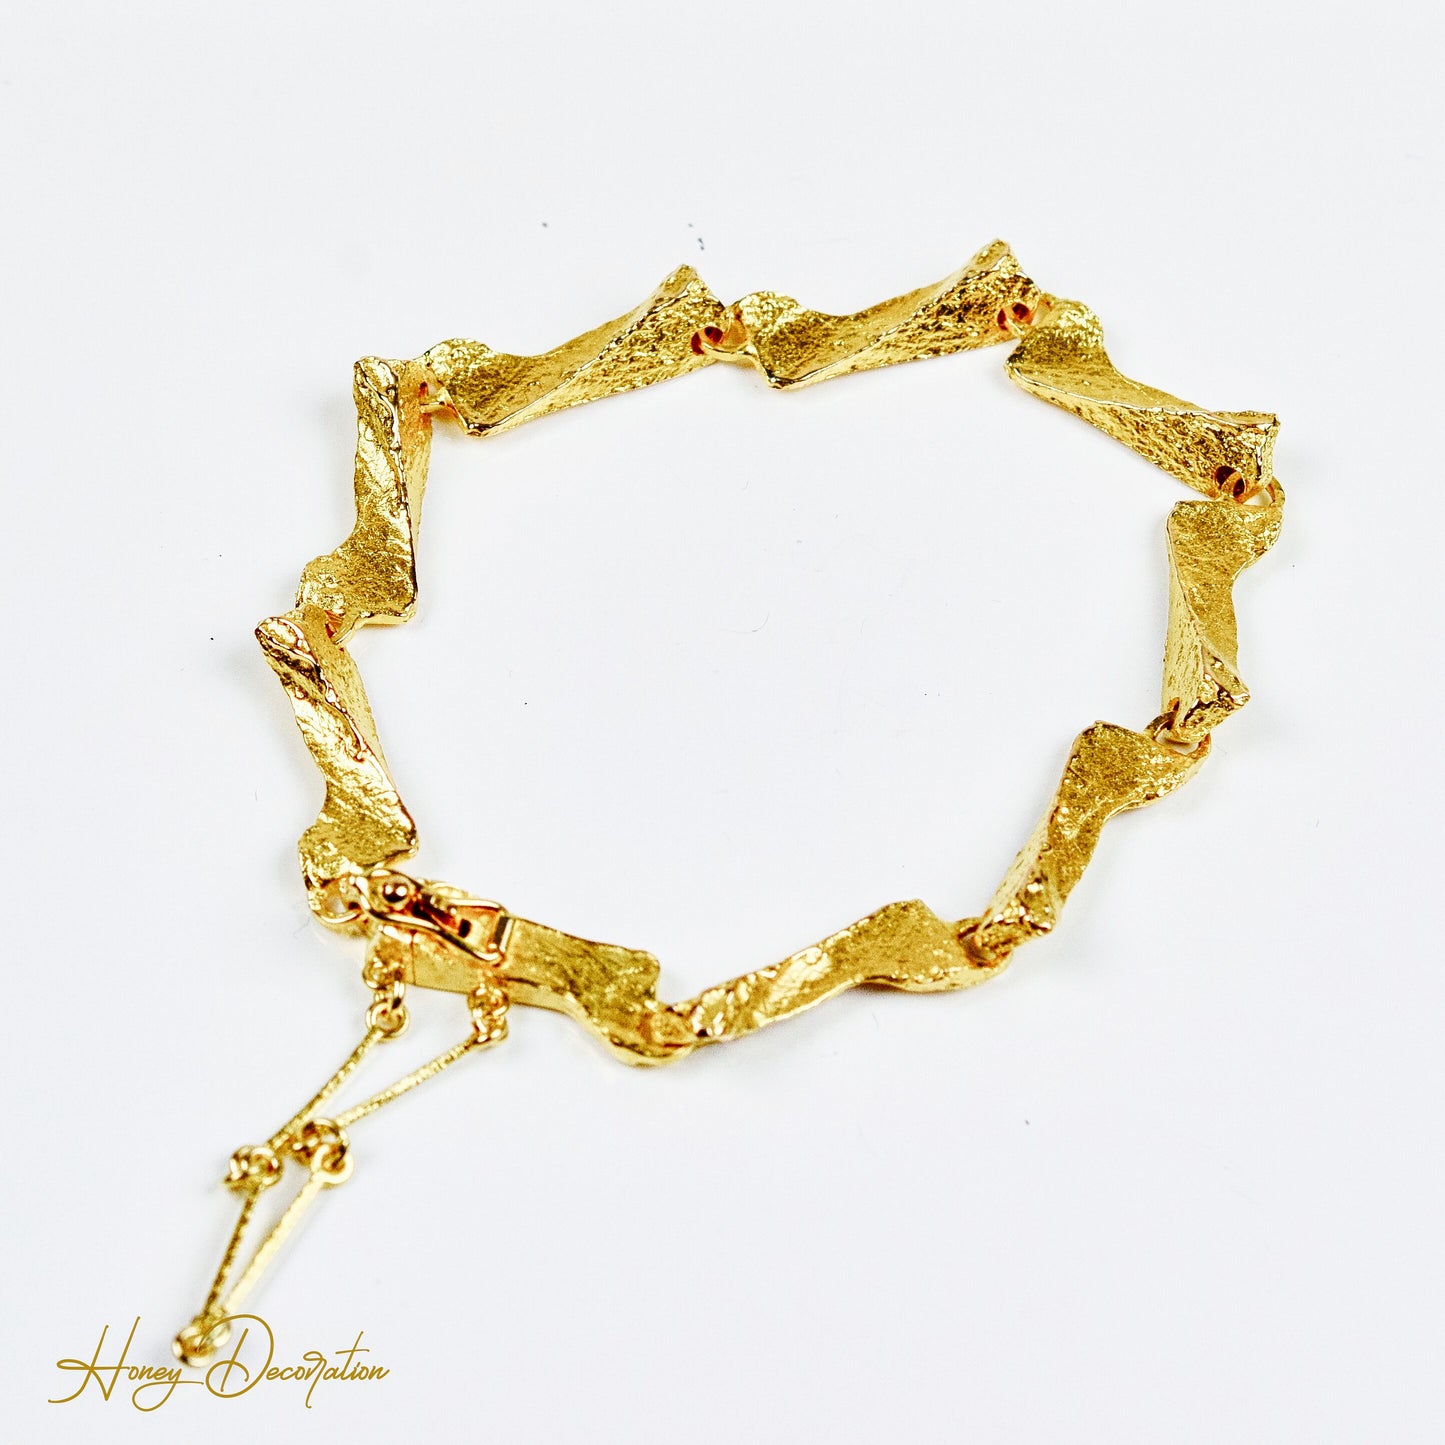 Stylish Lapponia design bracelet made of 14 karat gold